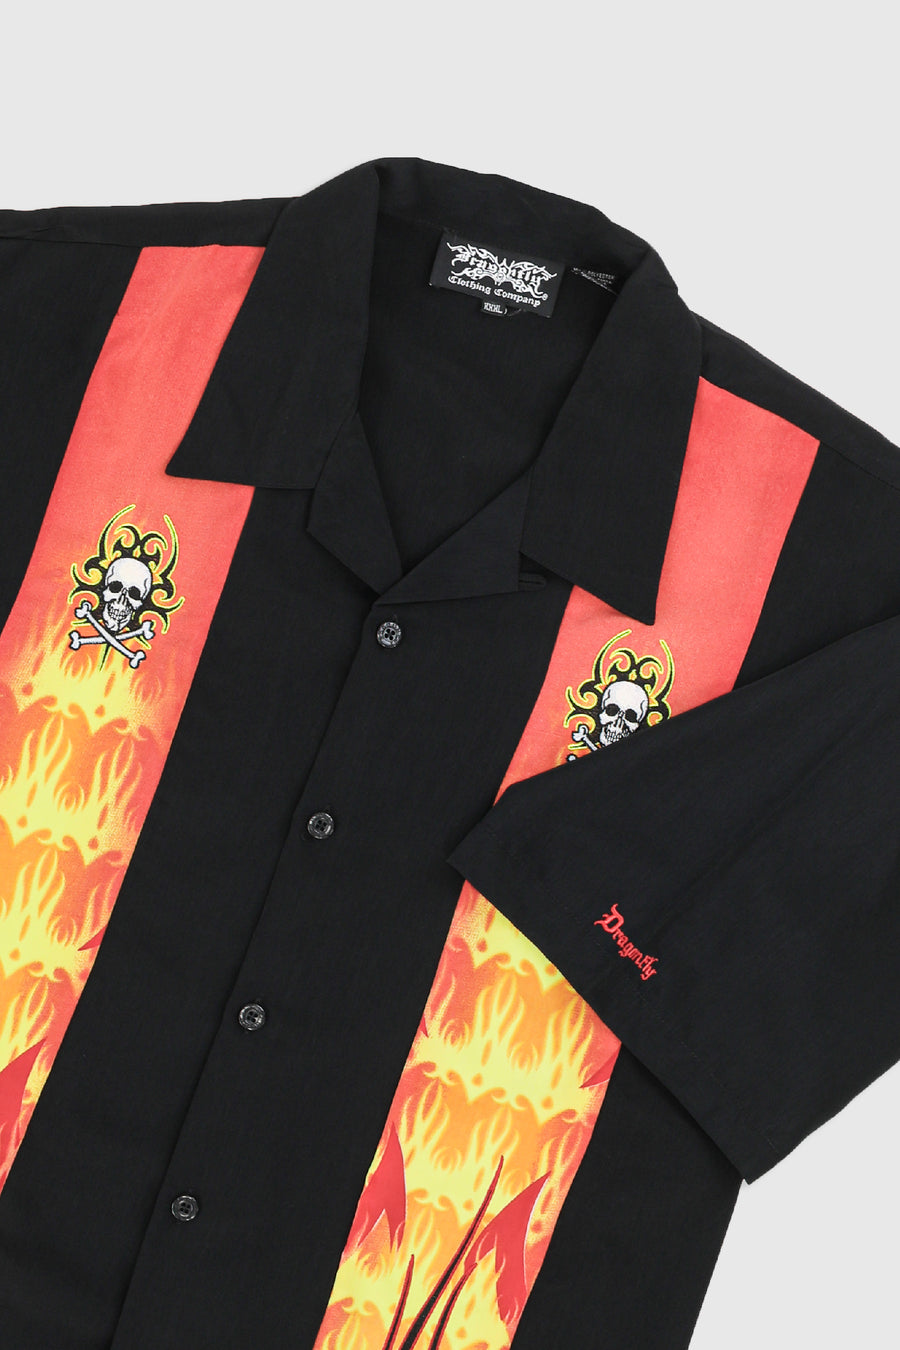 Deadstock Dragonfly Flame Accent Camp Shirt - M, L, XL, XXL, XXXL